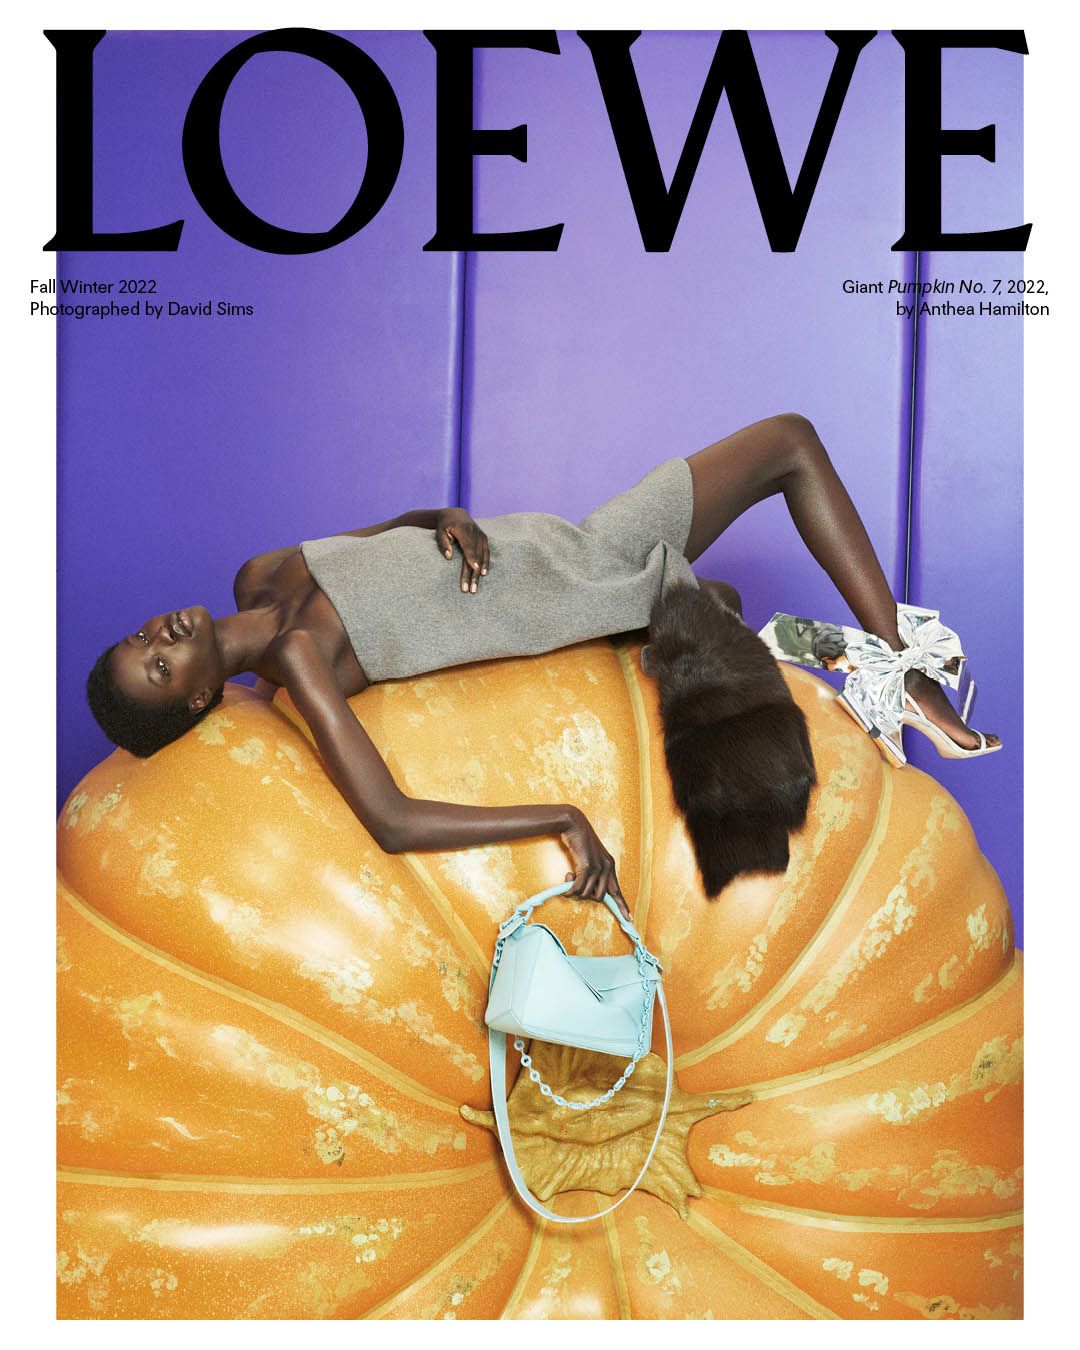 Loewe Introduces New Goya Bag Silhouette